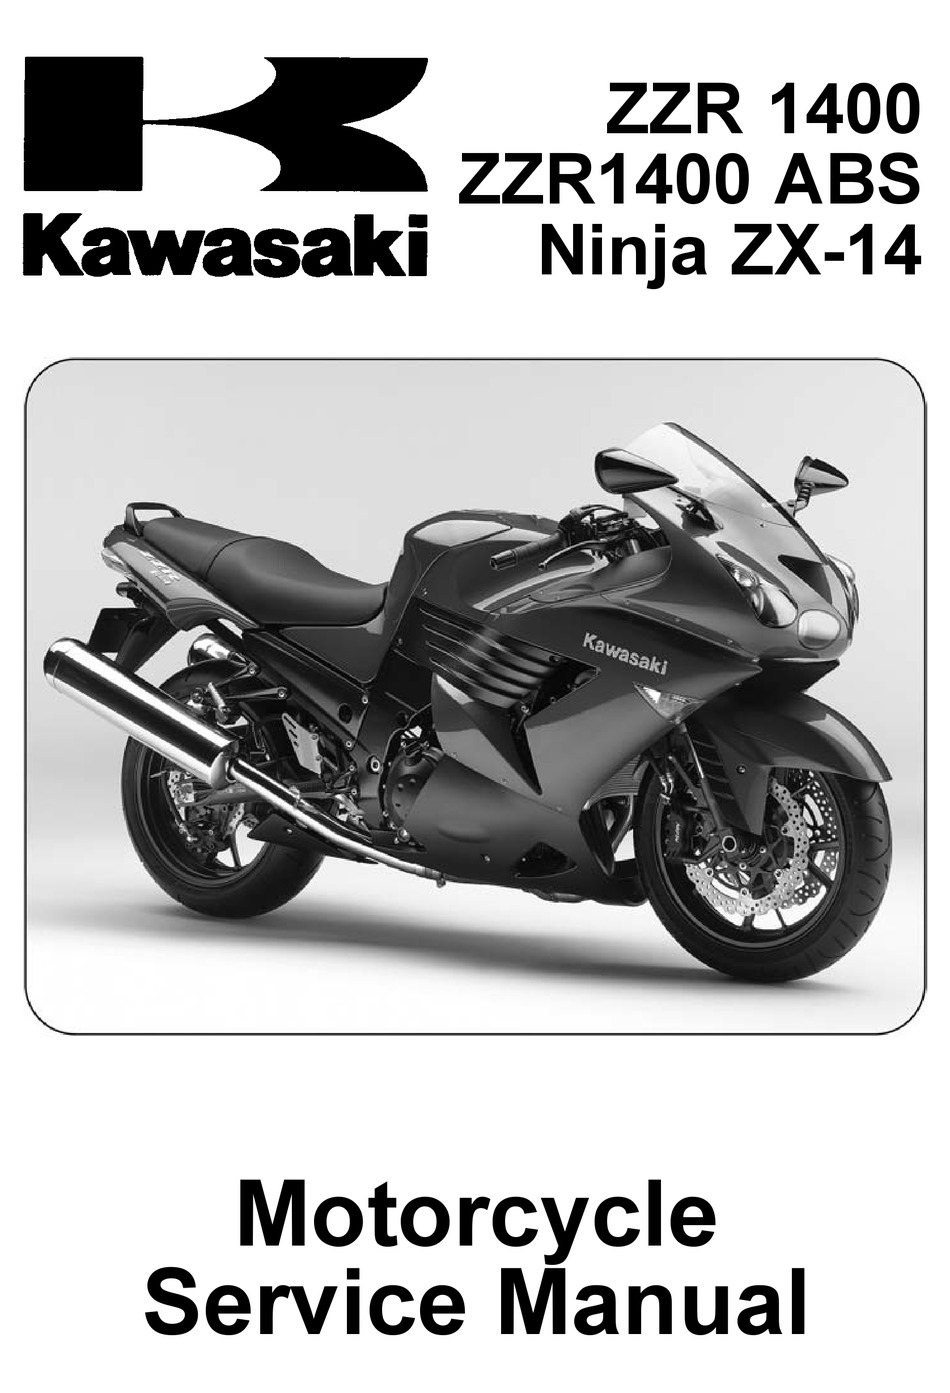 KAWASAKI ZZR1400 ABS SERVICE Pdf Download | ManualsLib